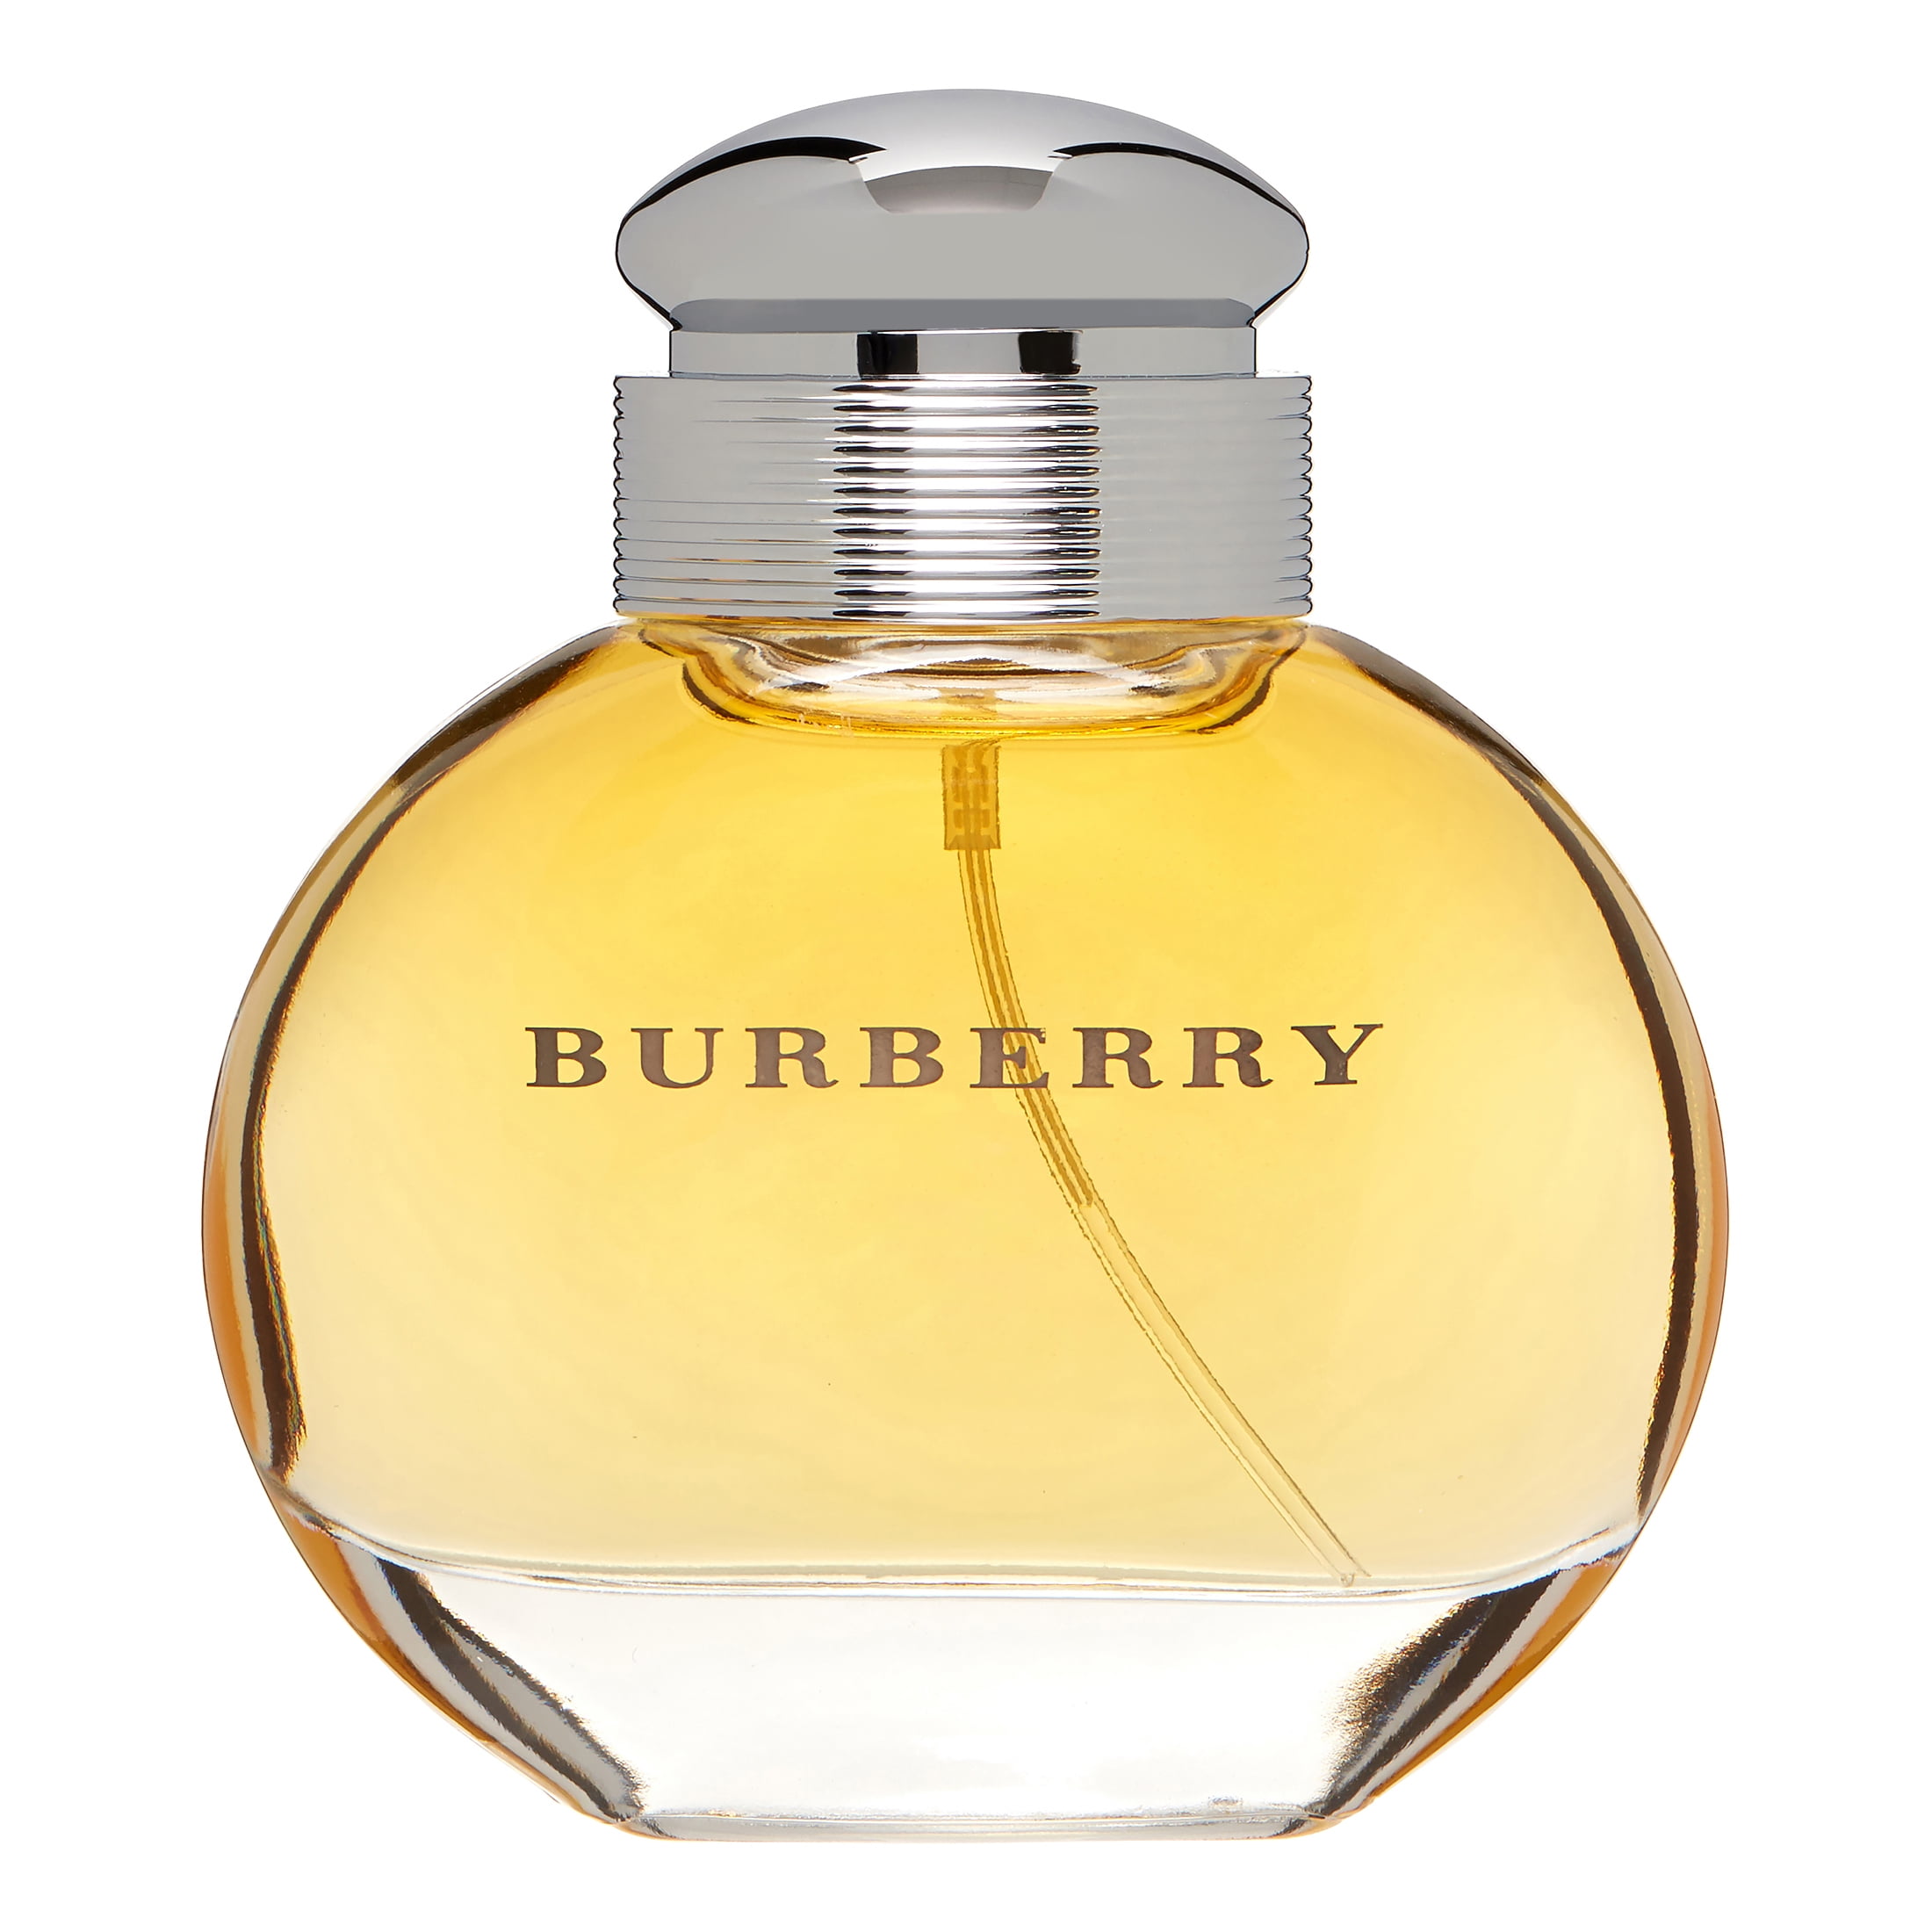 burberry for women parfum